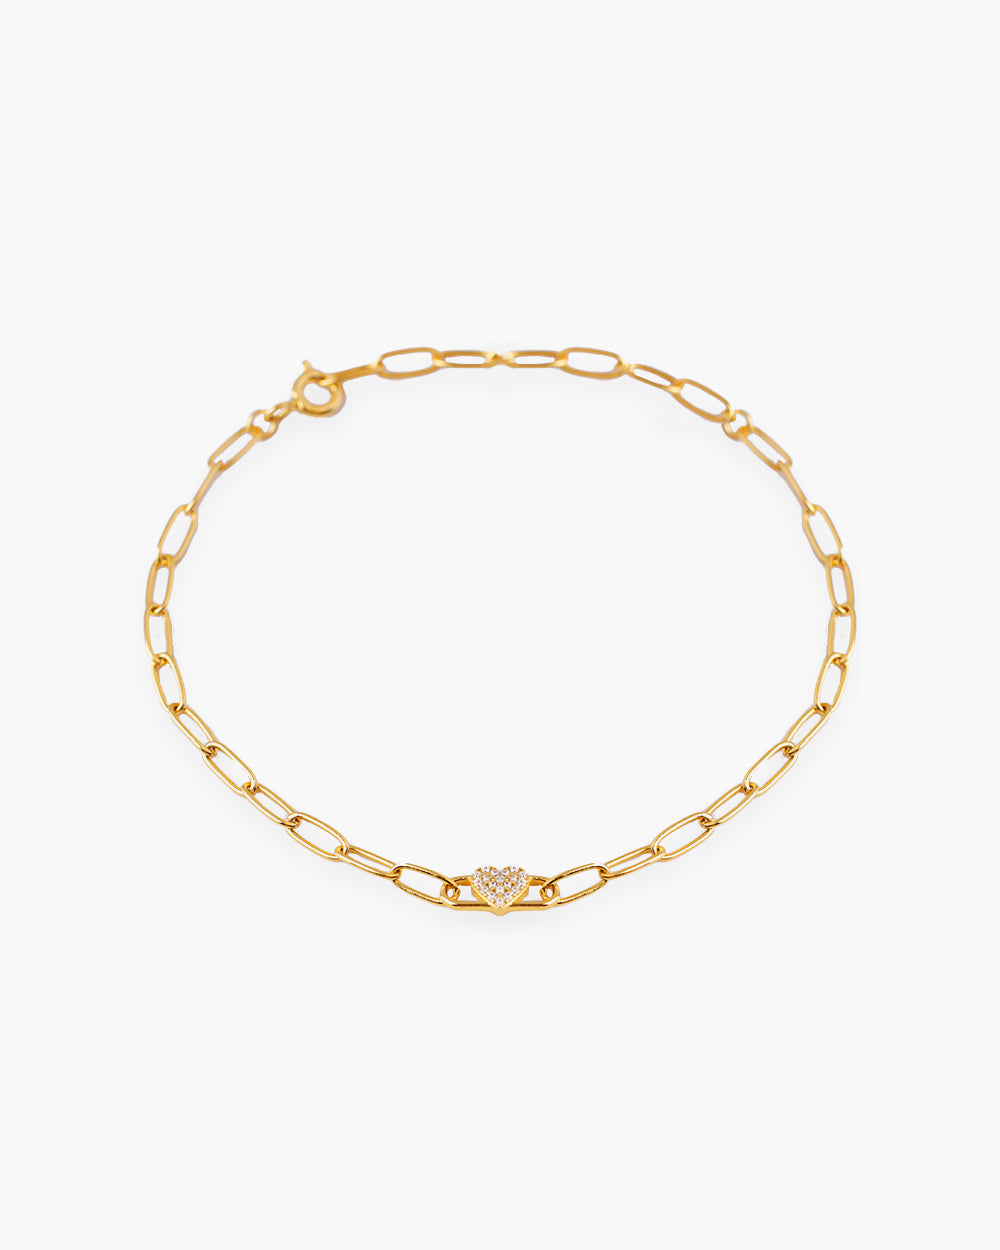 Lorelai Gold Bracelet